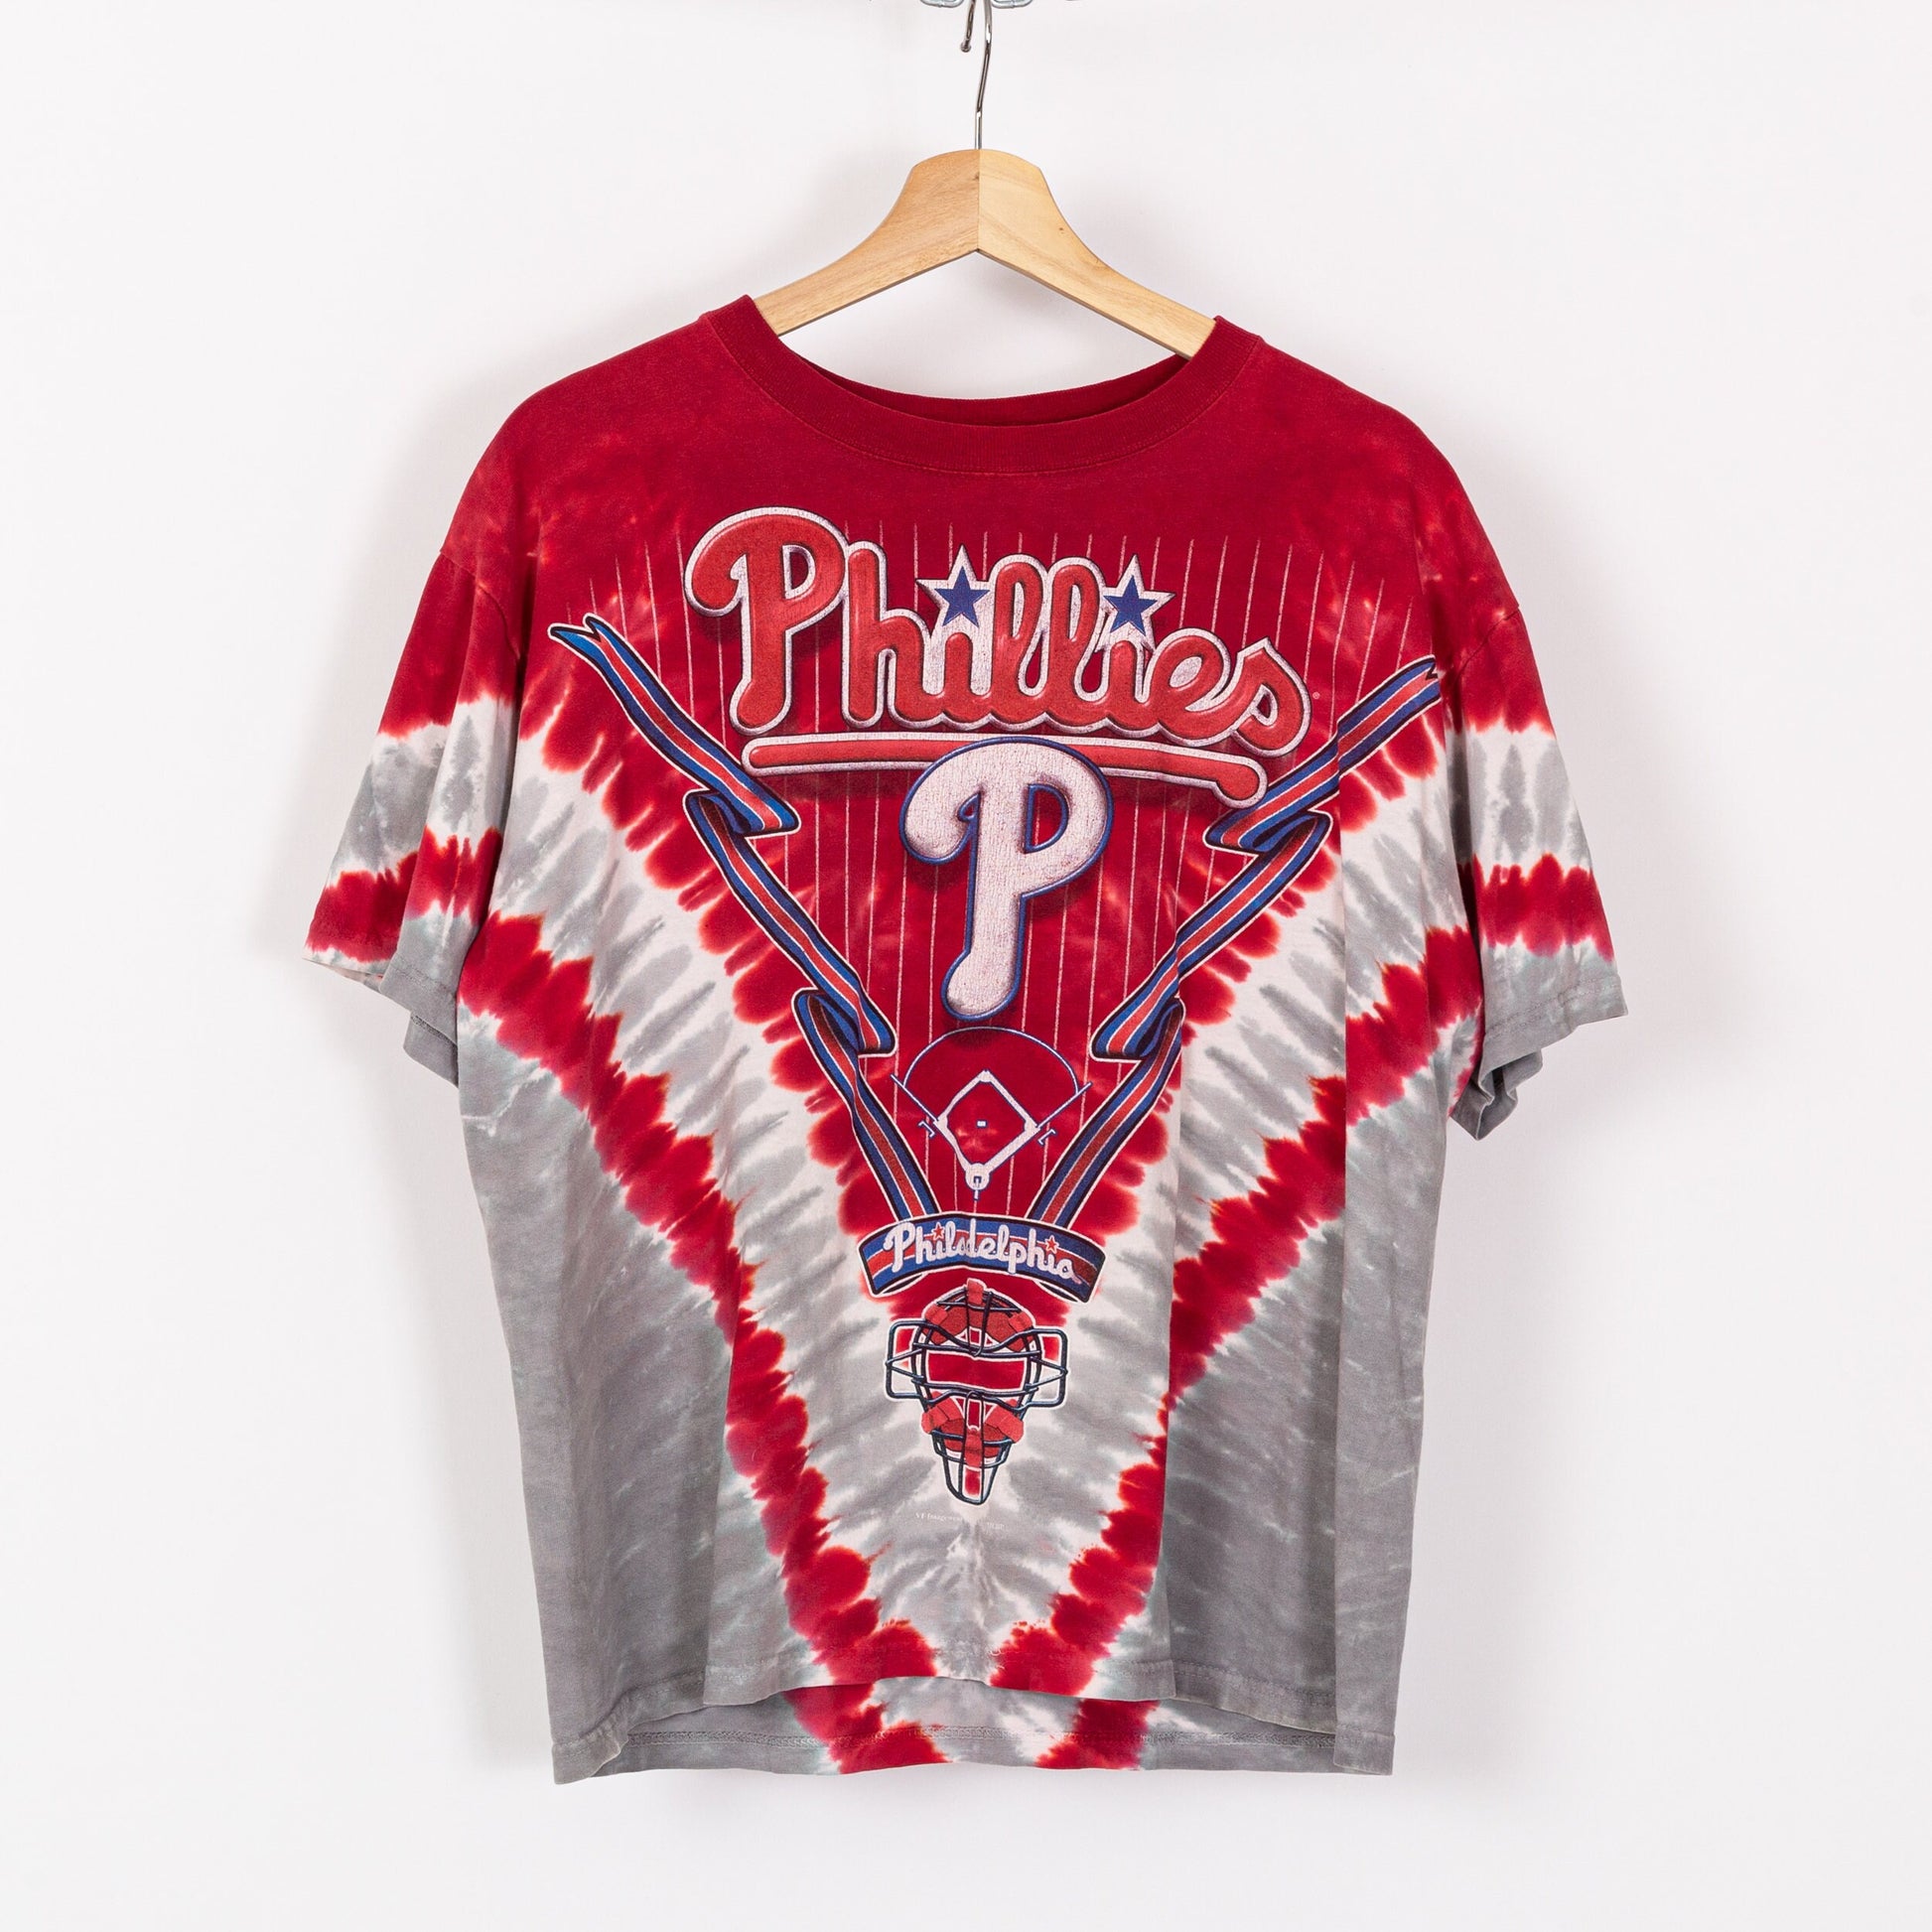 Phillies womens shirts